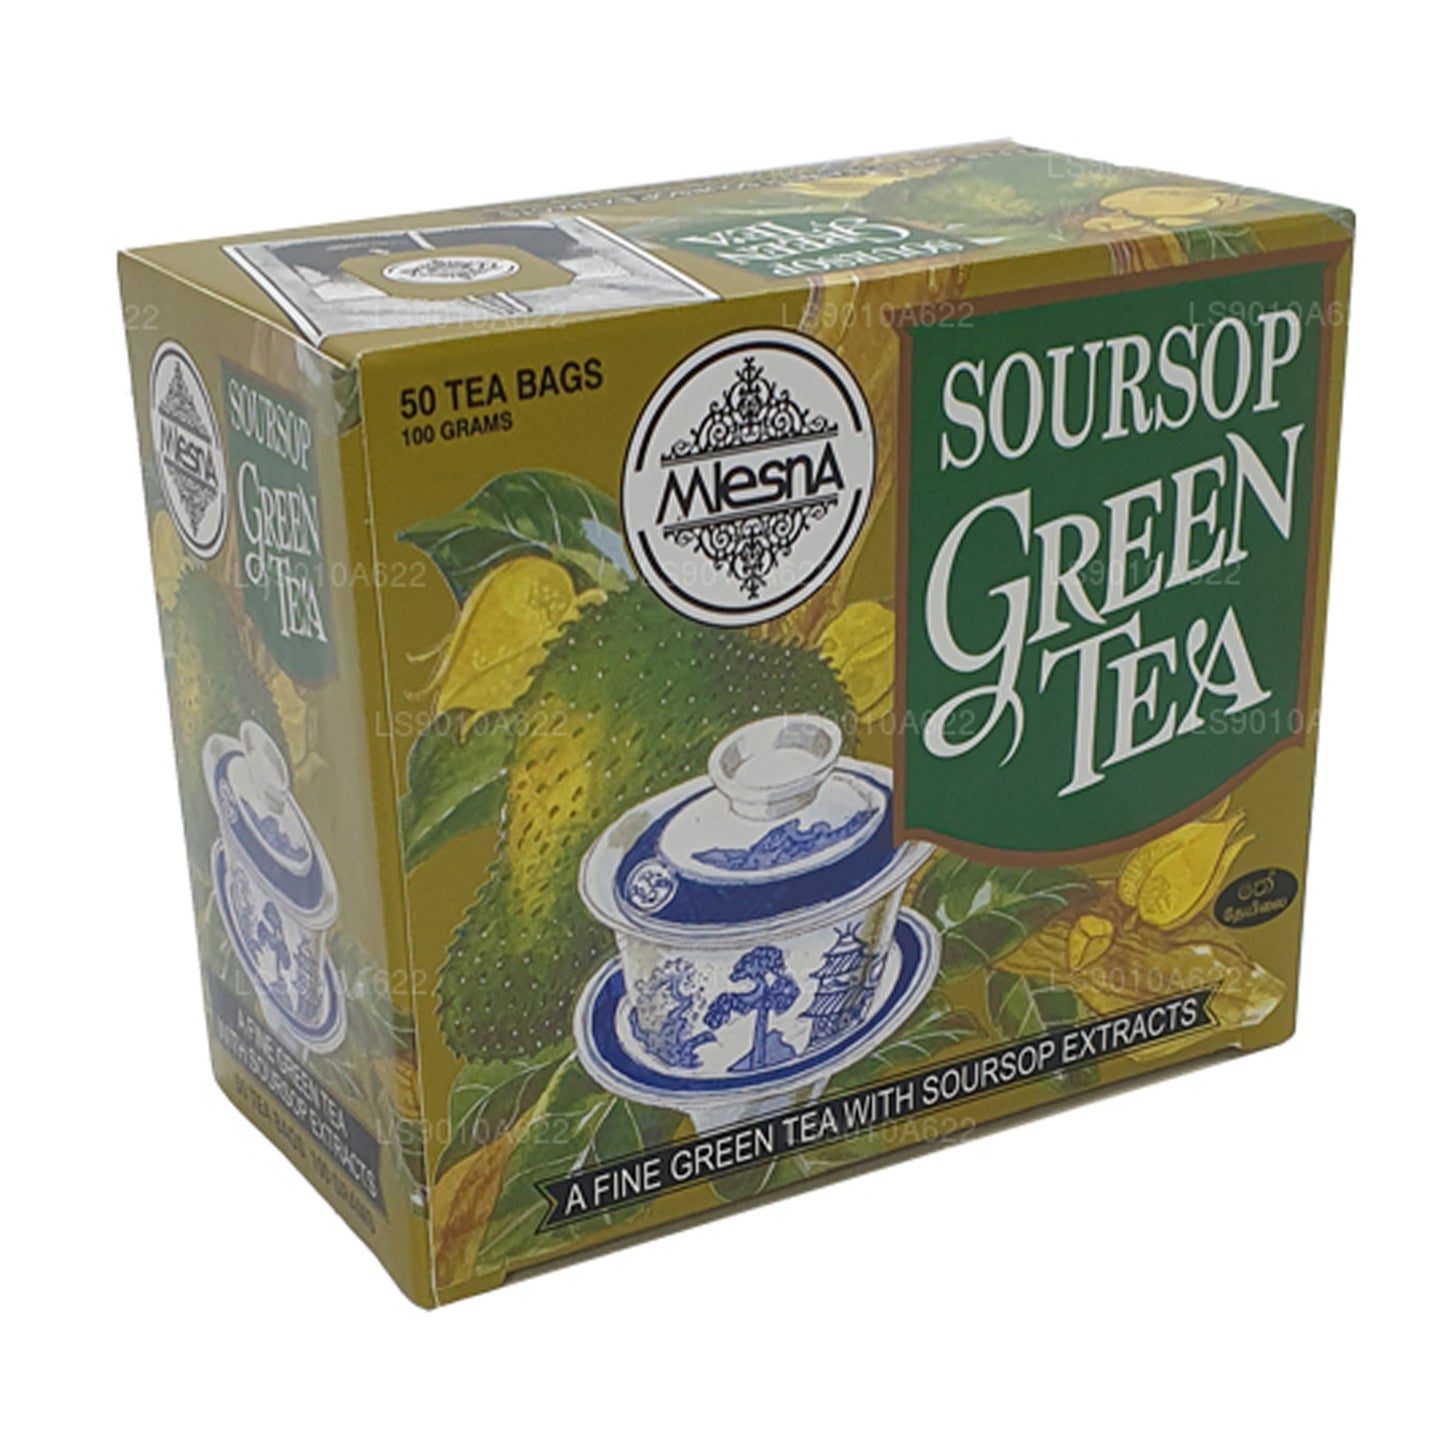 Mlesna Soursop roheline tee (100g) 50 teekotid